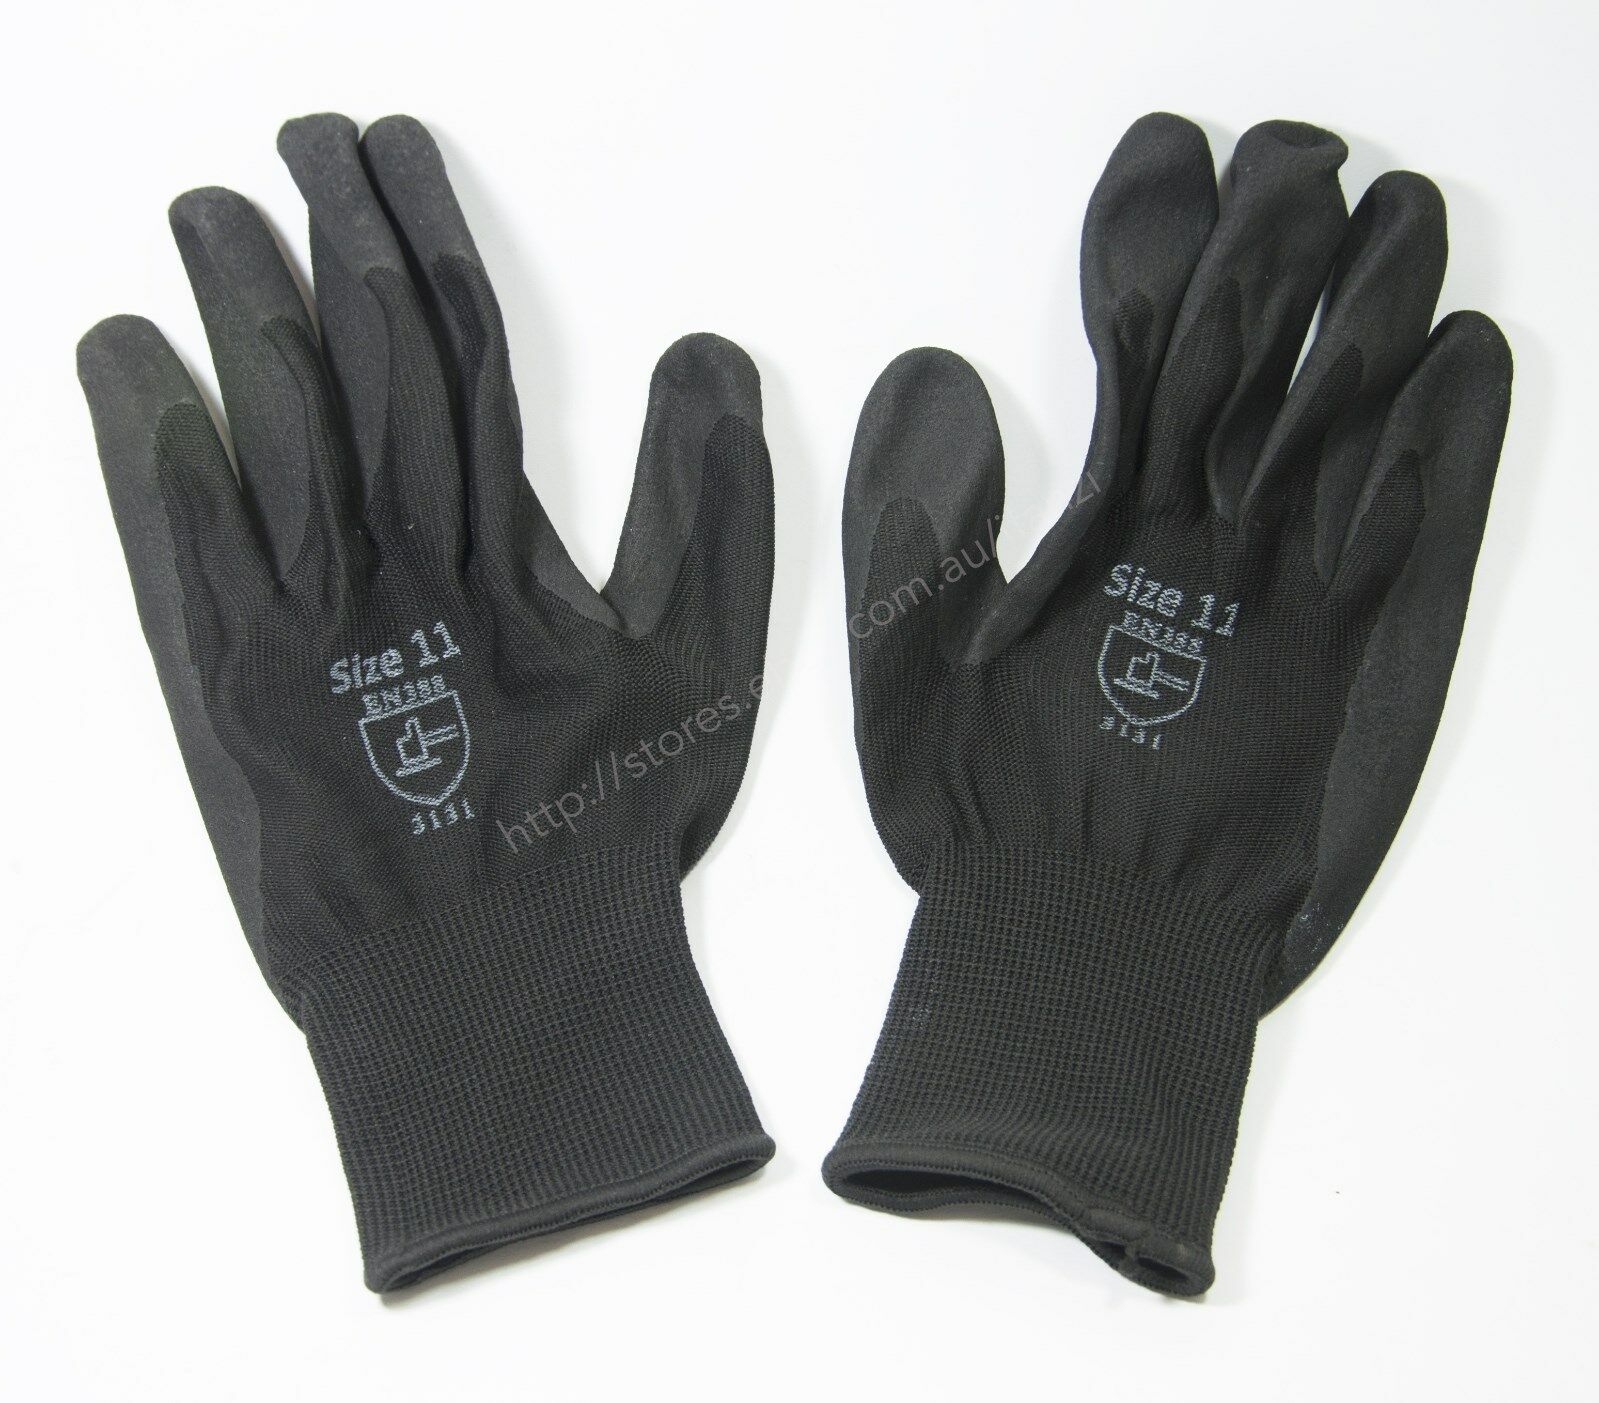 AUSTORE Nitrile Gloves Sandy Finished Size 11 8244